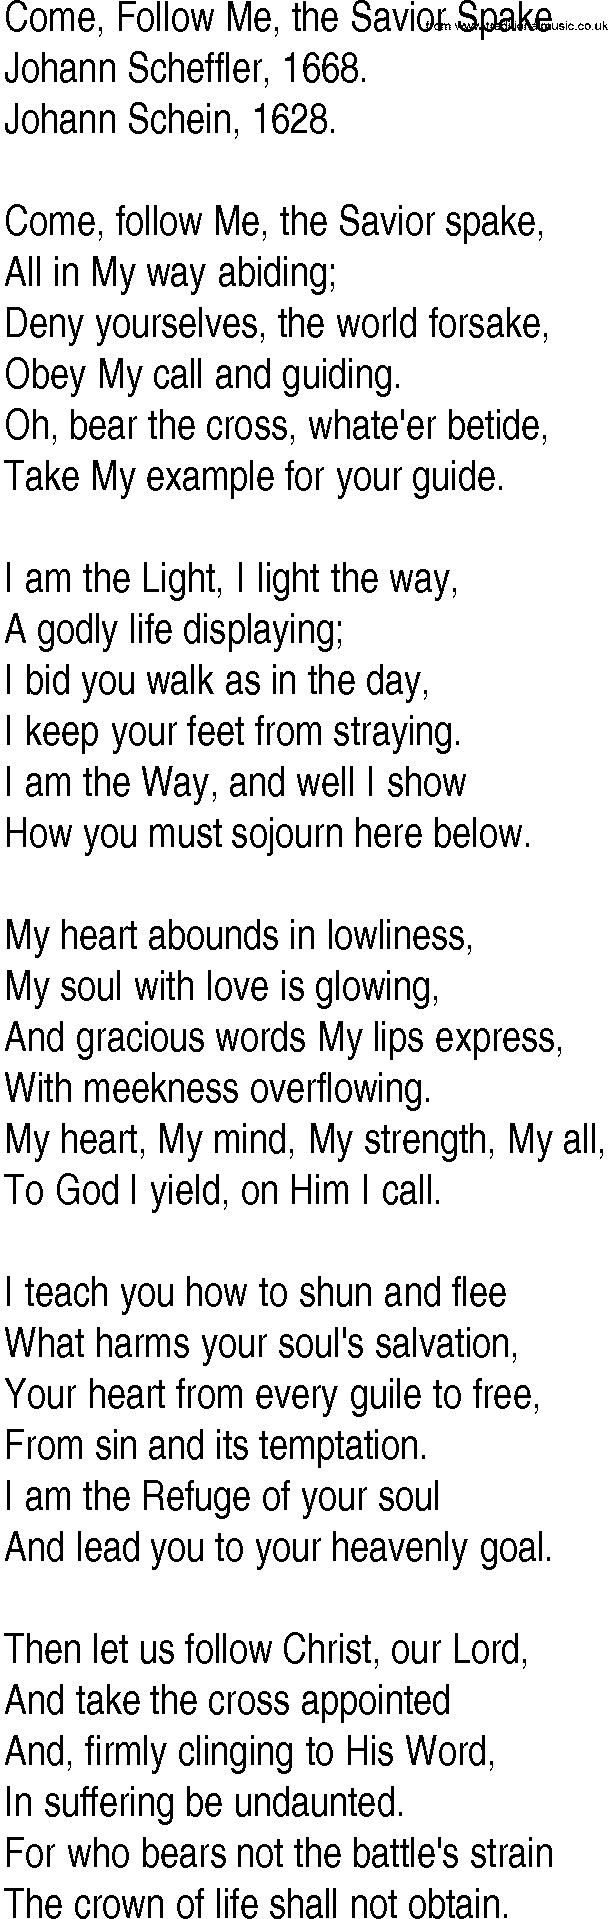 Hymn and Gospel Song: Come, Follow Me, the Savior Spake by Johann Scheffler lyrics